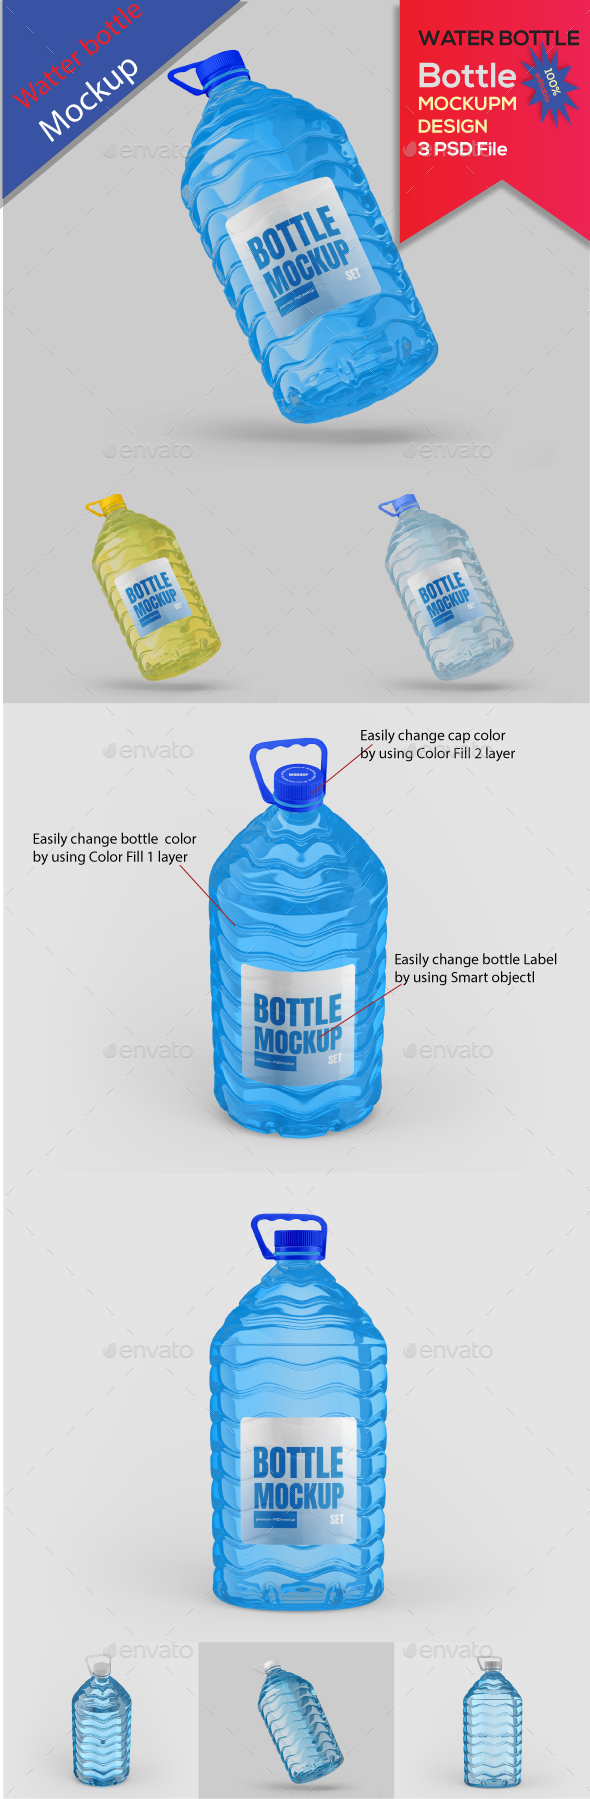 Big Water Bottle Mockup